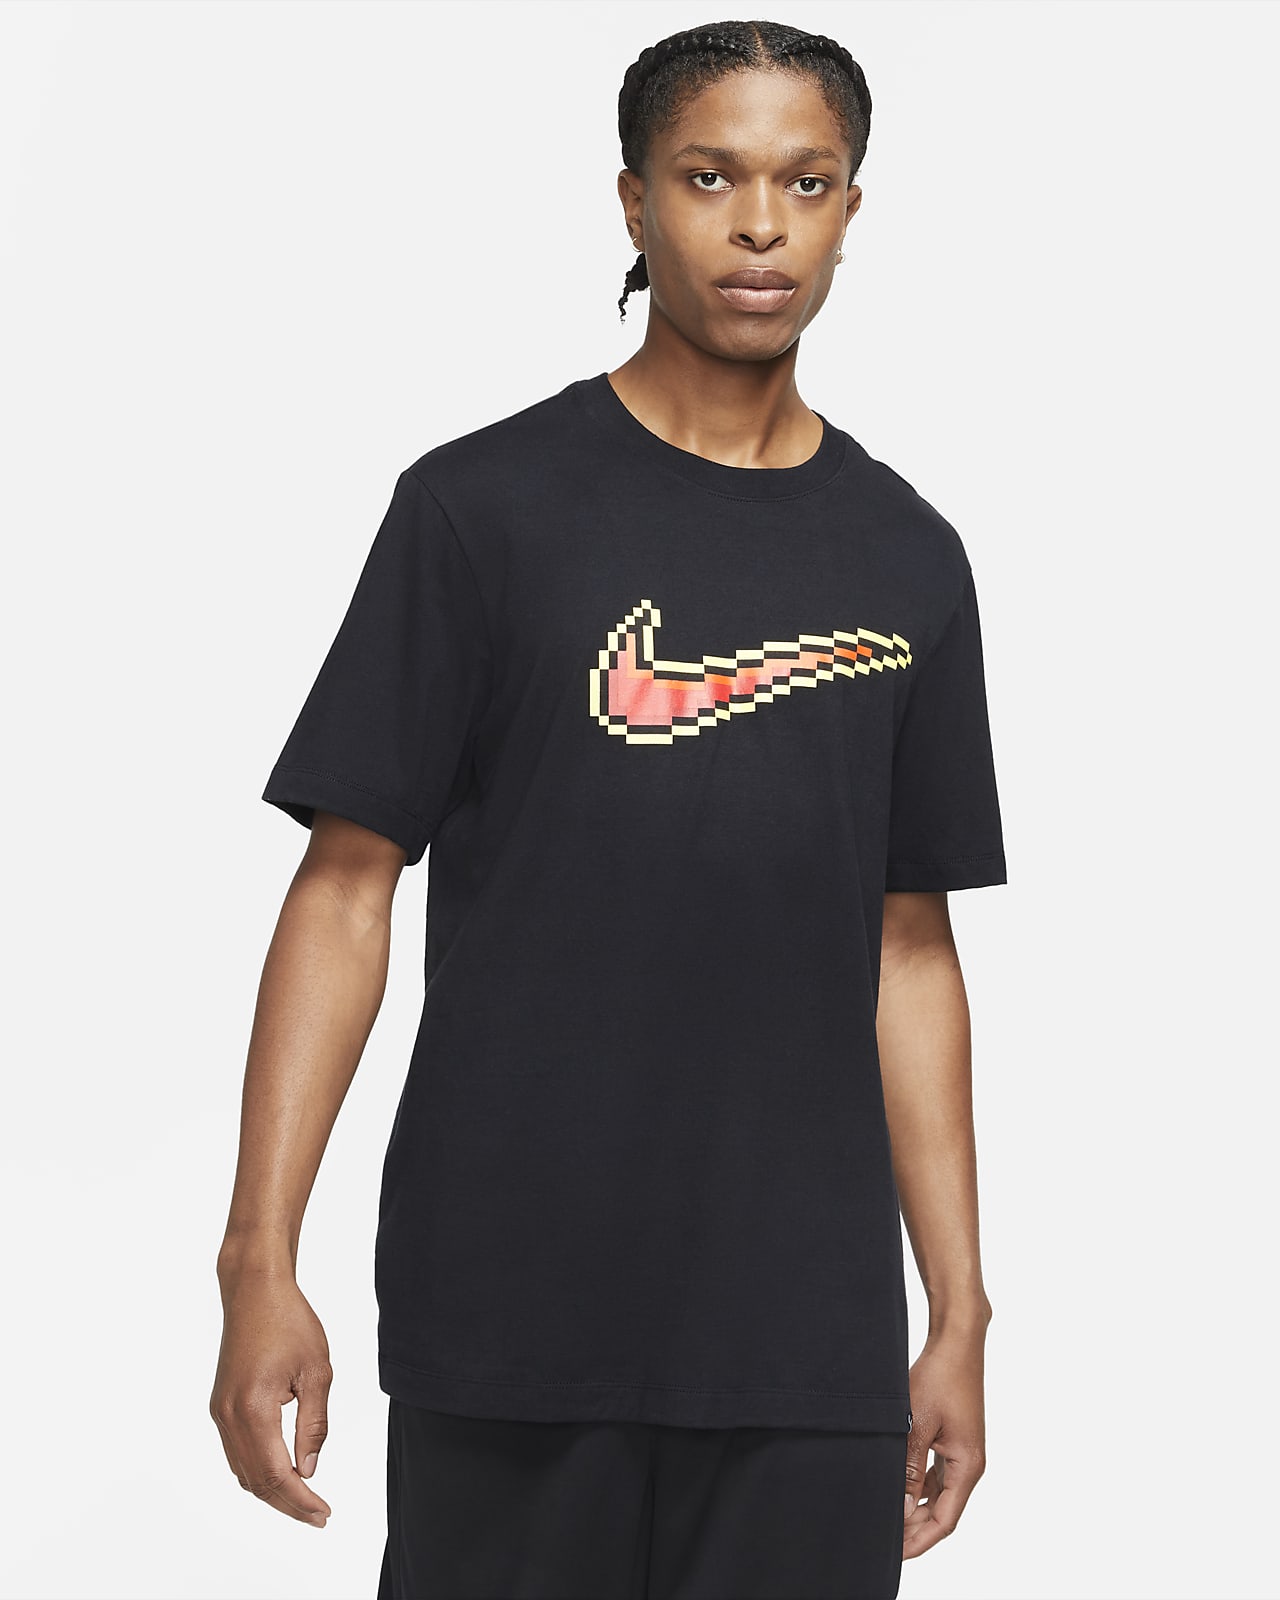 Nike Swoosh 男款短袖籃球 T 恤